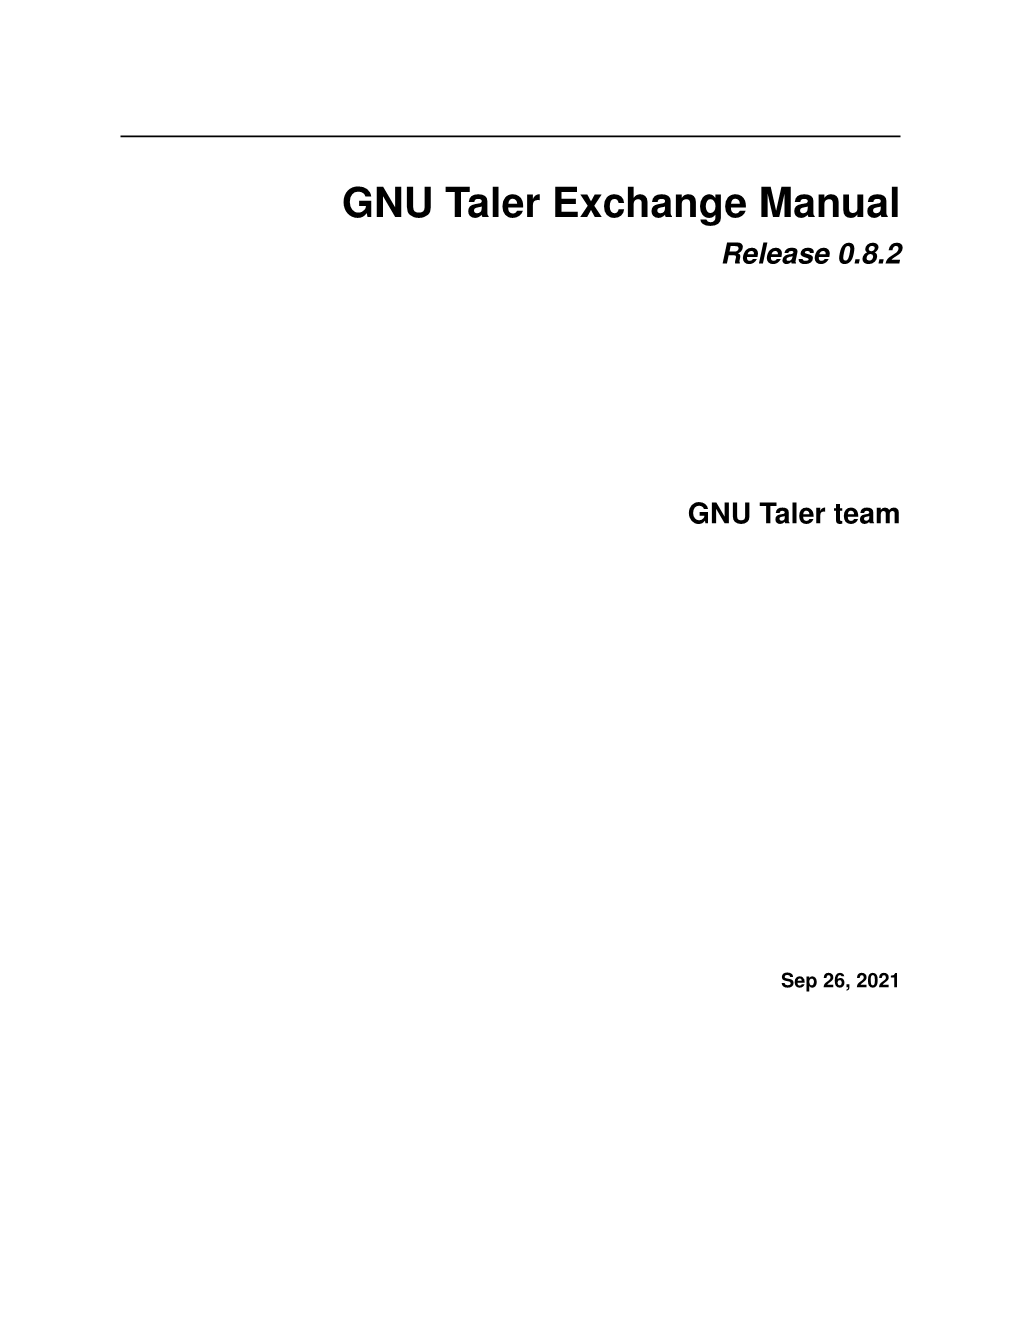 GNU Taler Exchange Manual Release 0.8.2